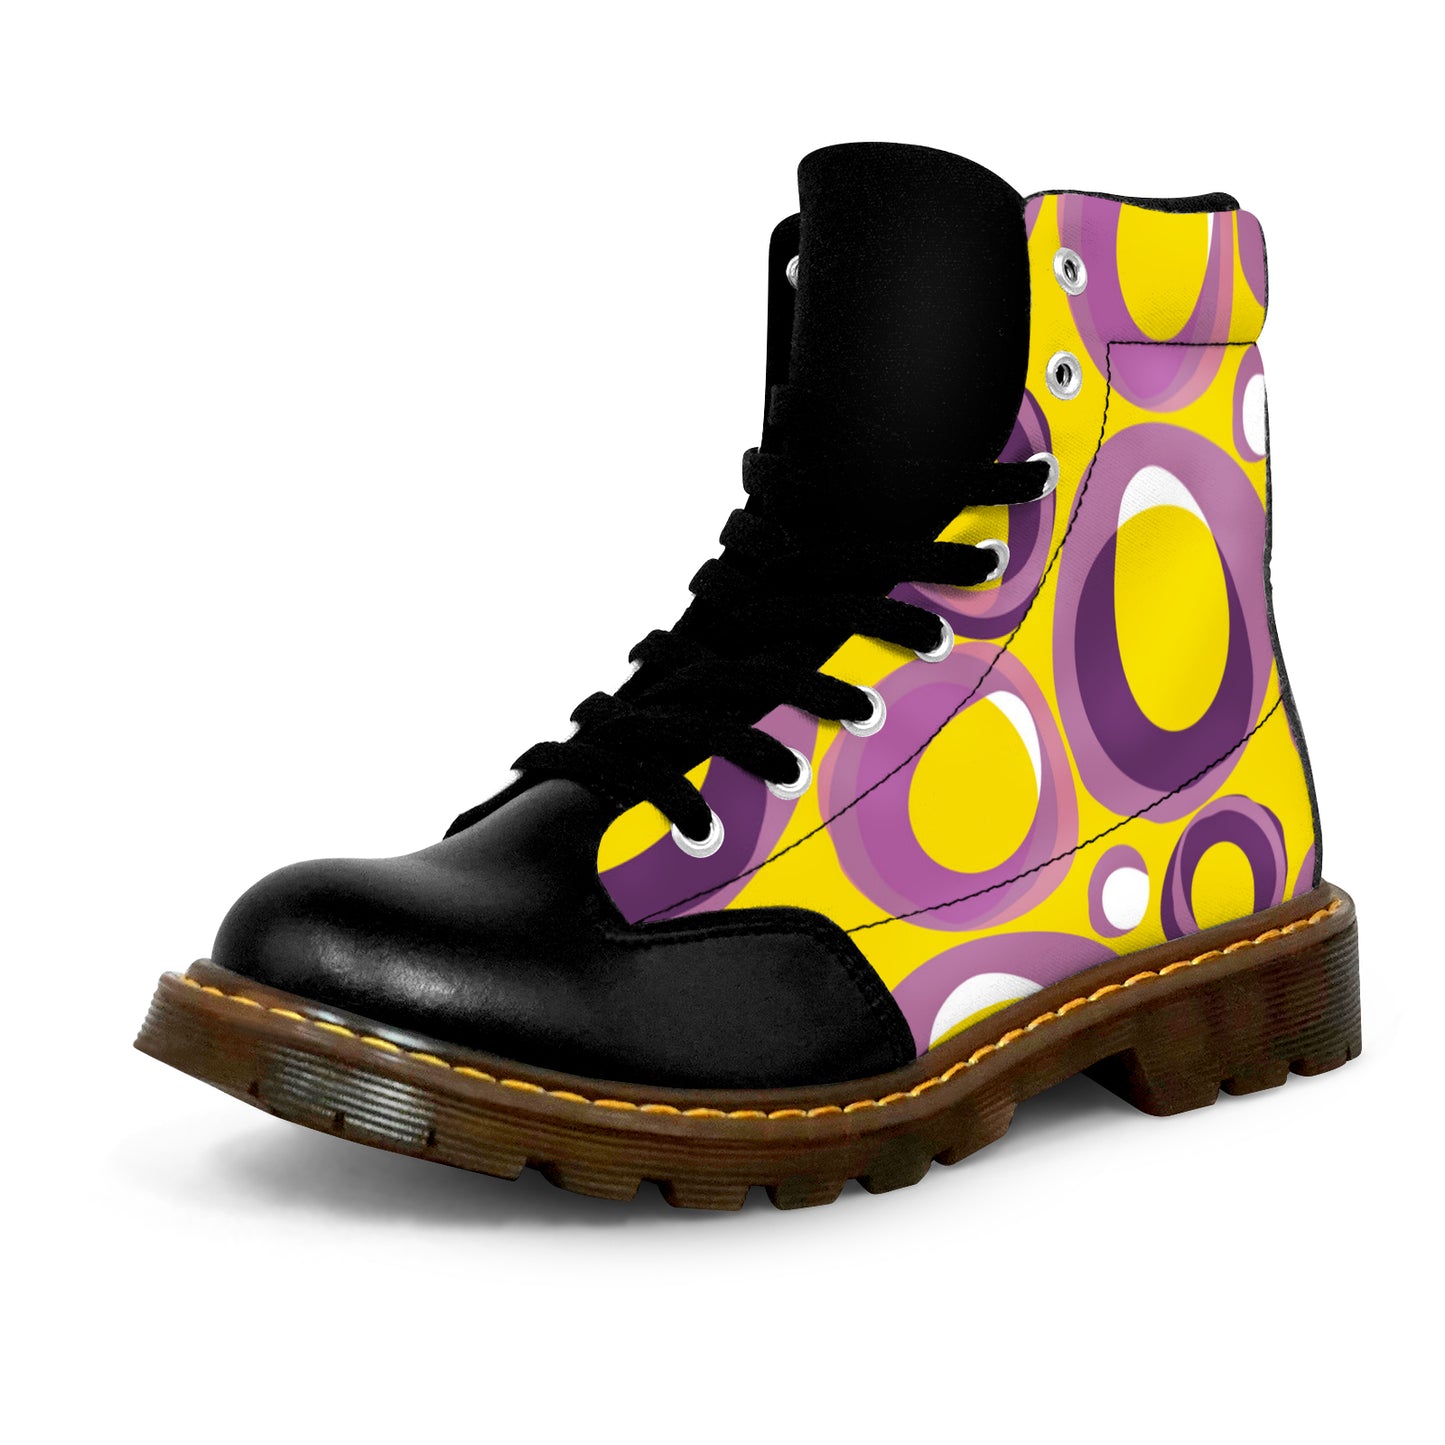 Winter Round Toe Women's Boots - Retro (Purple & Yellow)